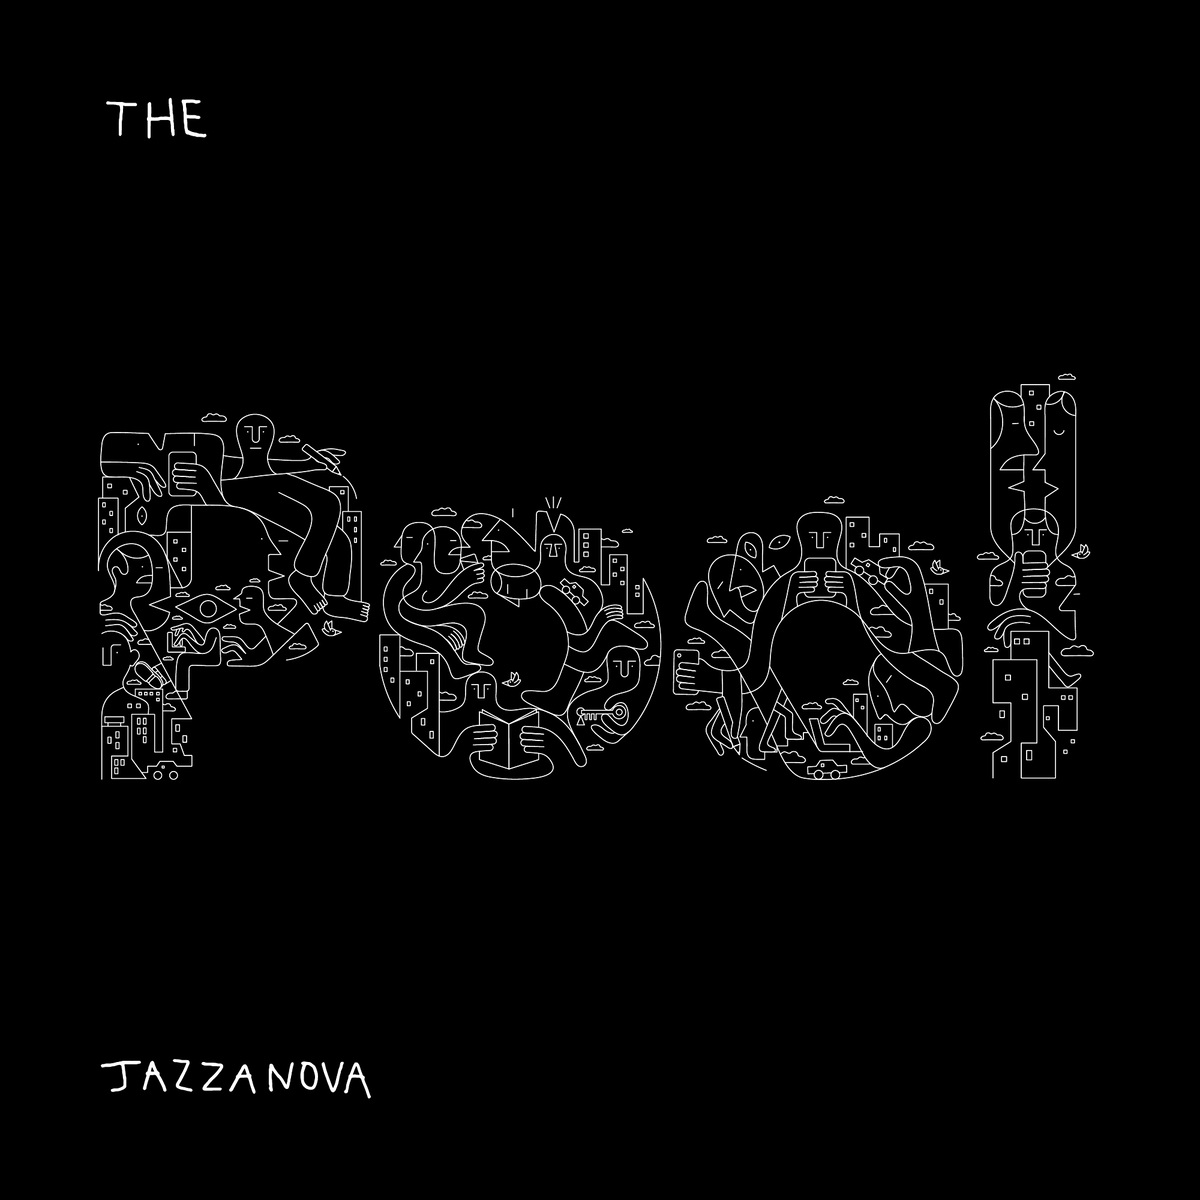 Jazzanova - The Pool / Sonar Kollektiv